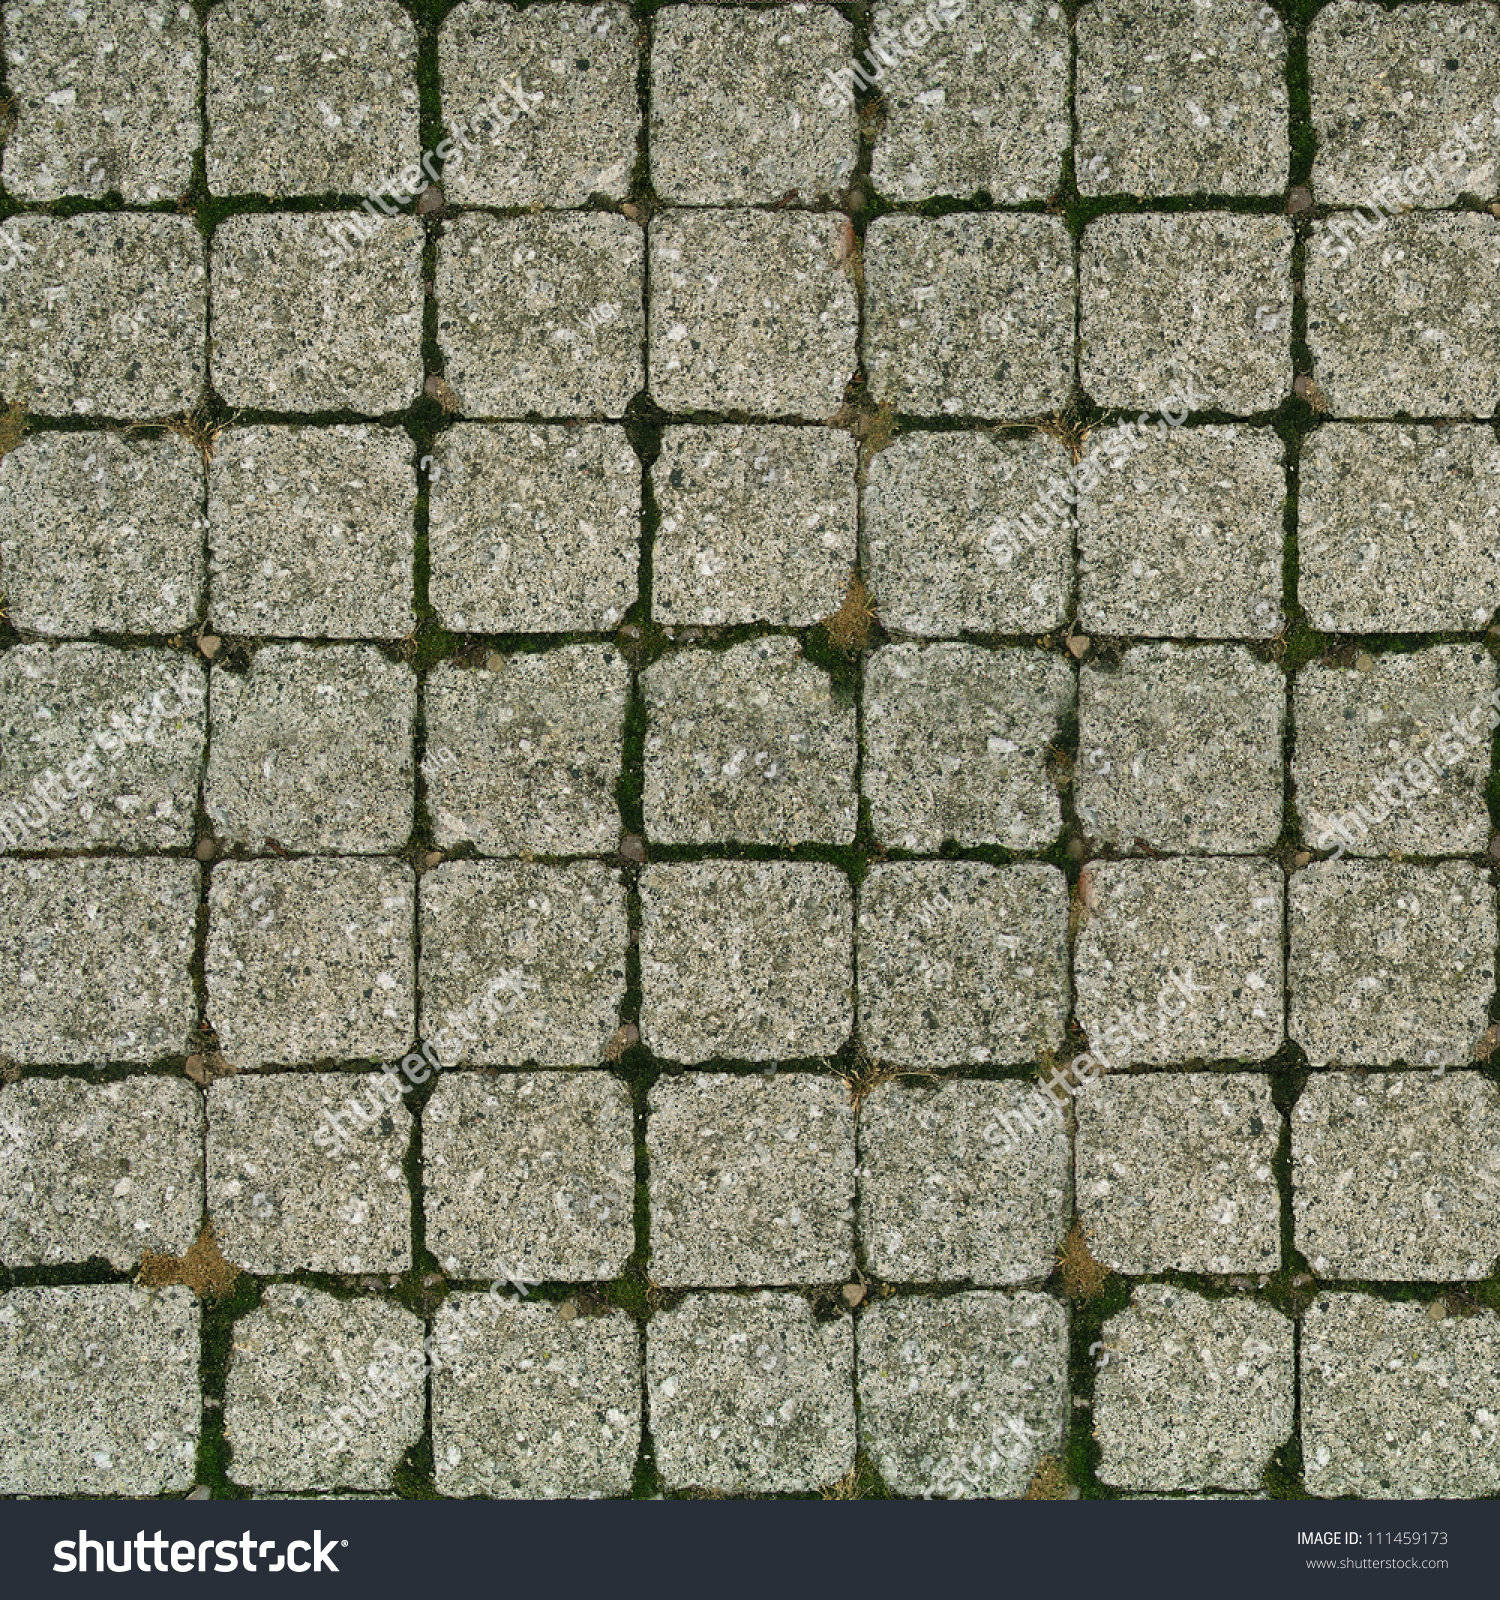 Background Stone Floor Texture Stock Photo 111459173 - Shutterstock